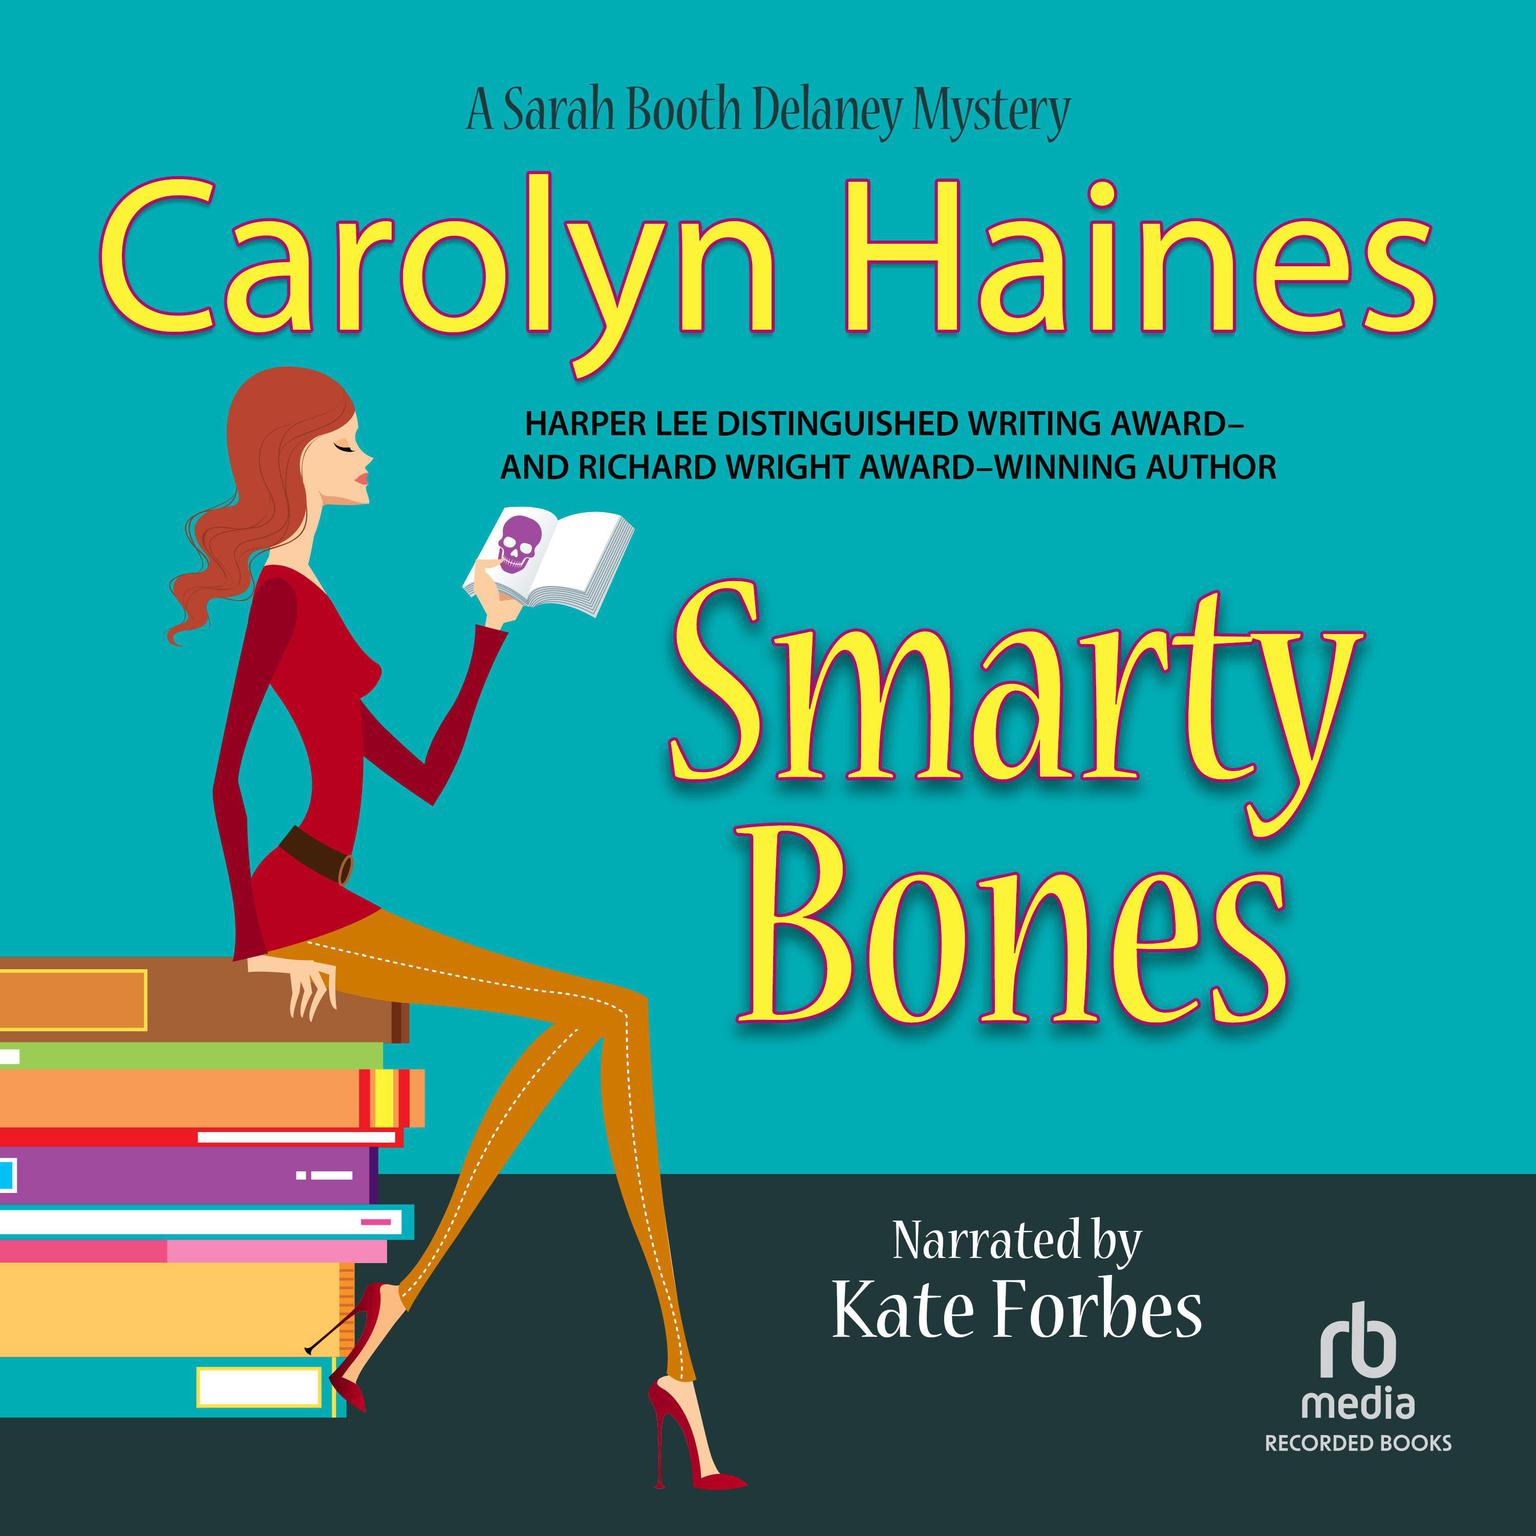 Smarty Bones Audiobook, by Carolyn Haines